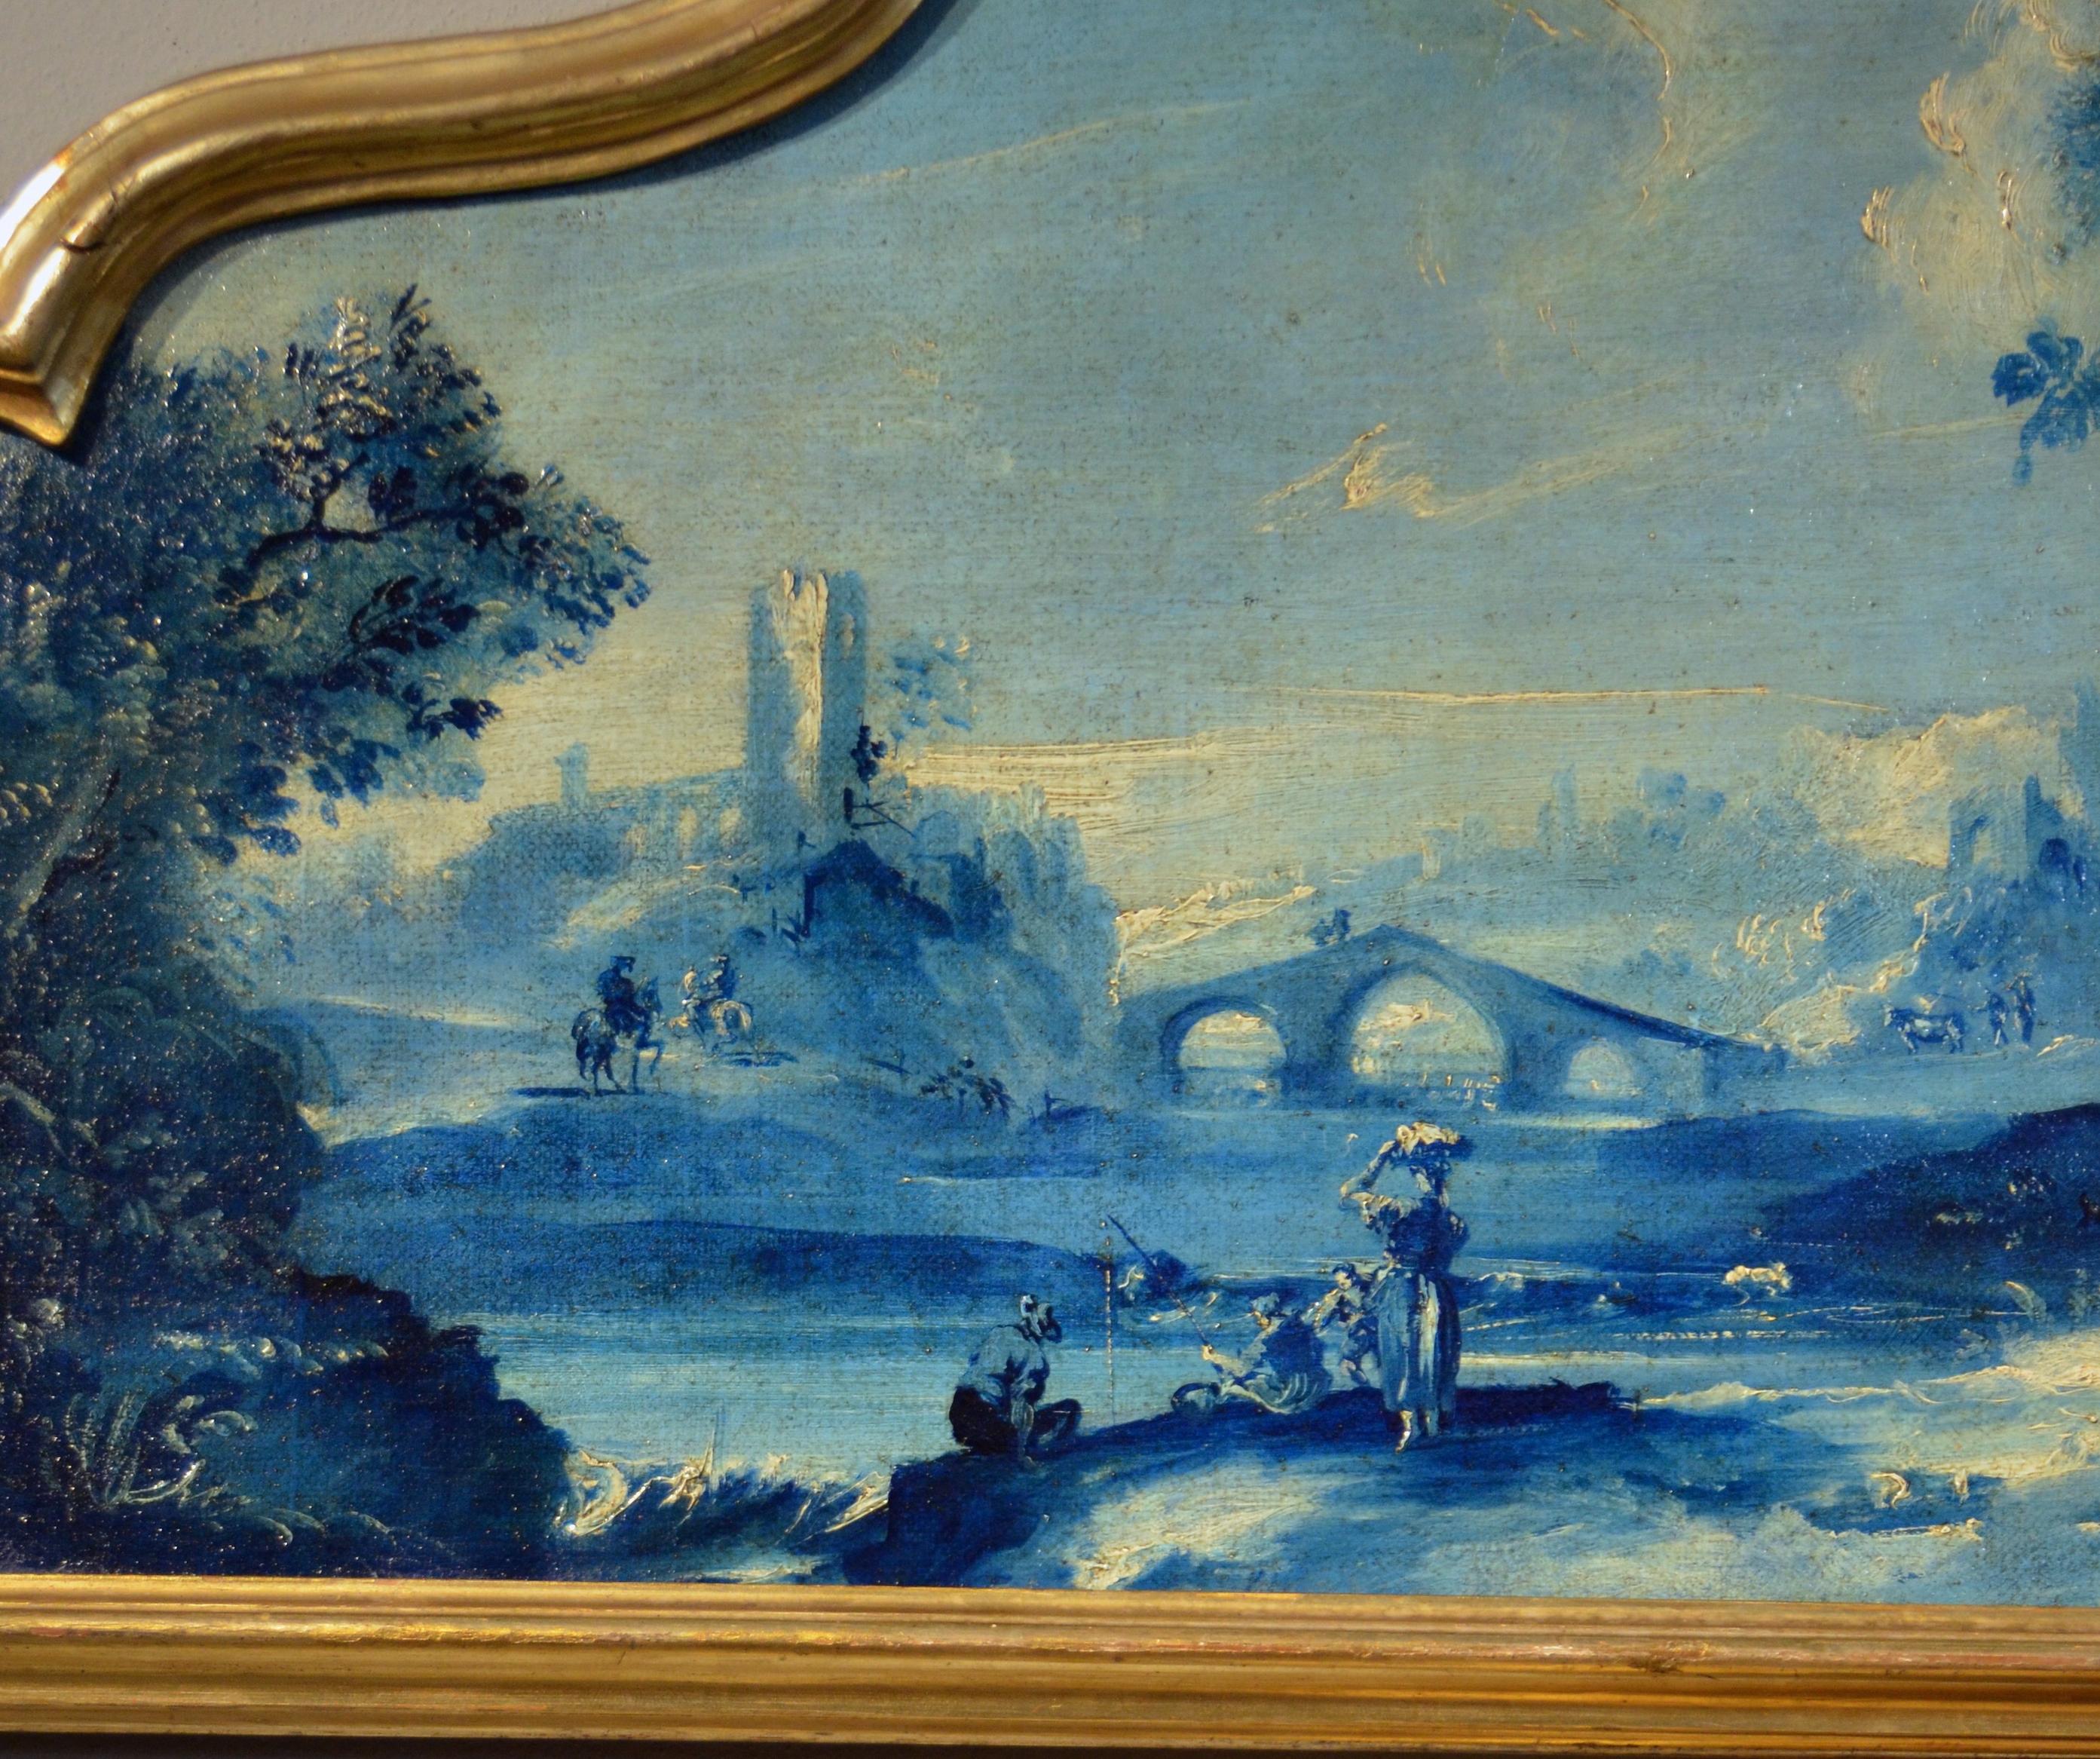 Paint Oil on canvas Pair Landscape Wood See Lake Venezia Italy Baroque Ricci Art 9